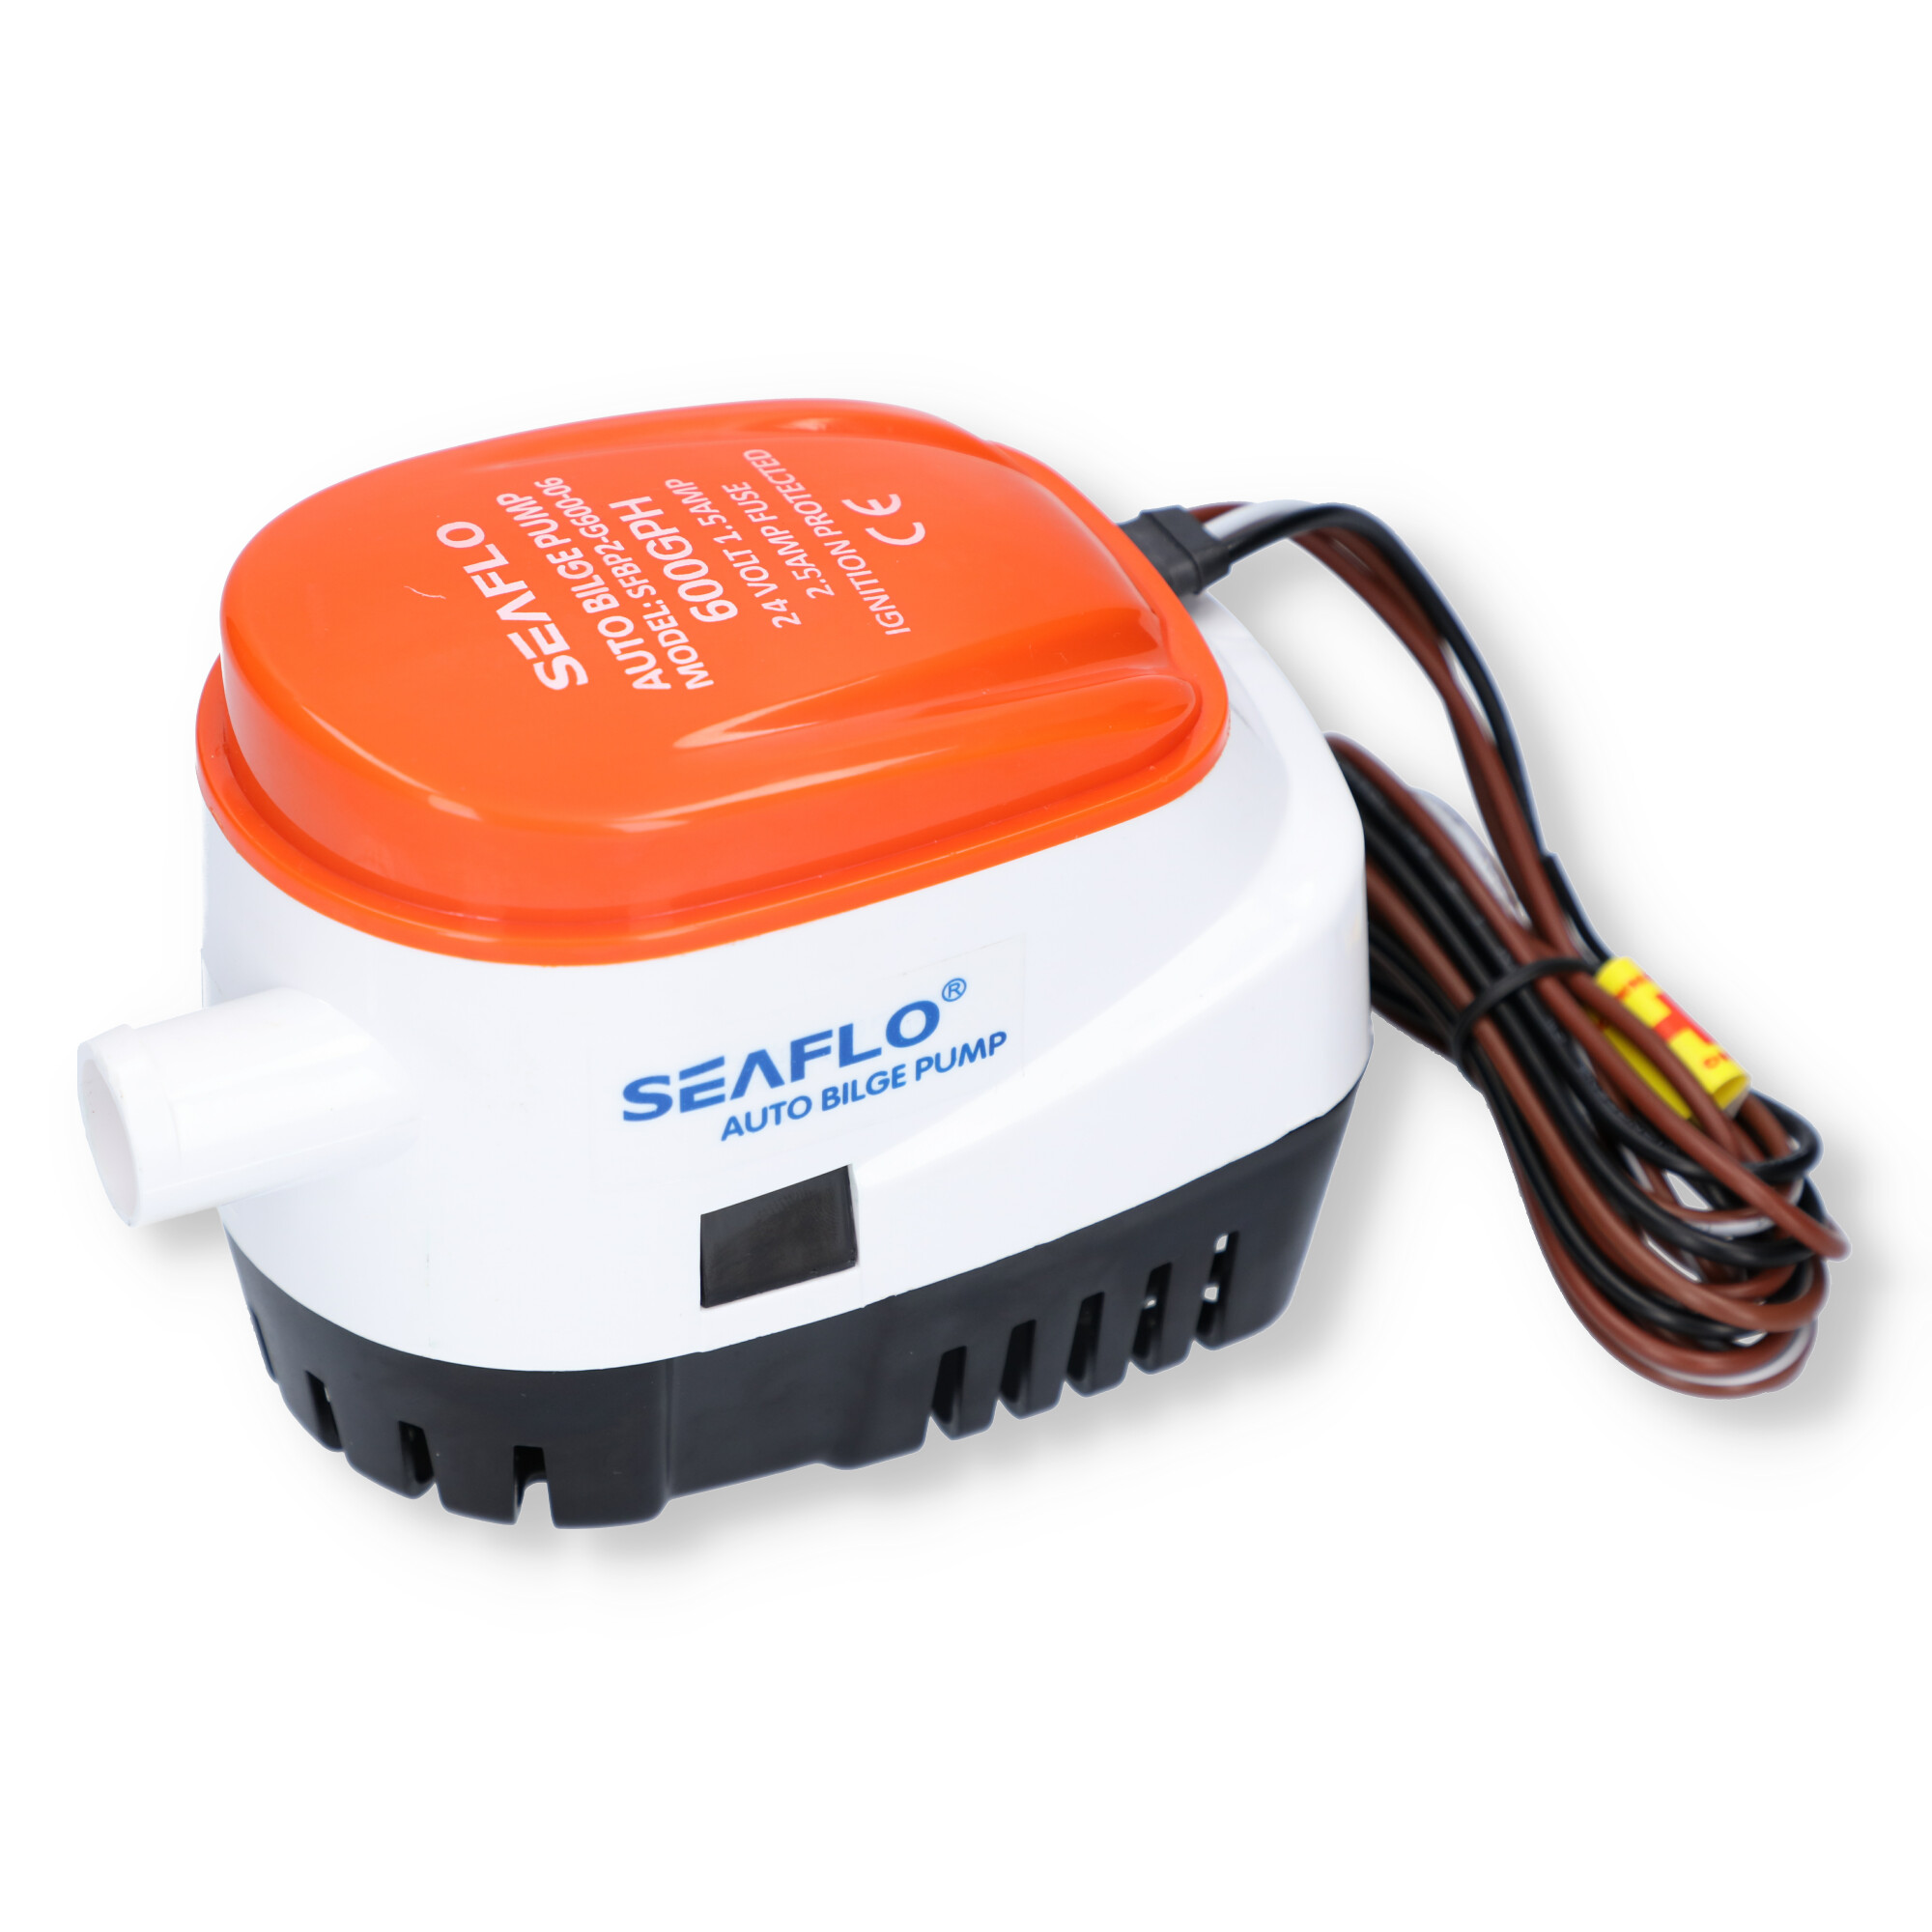 SEAFLO ® Automatik Bilge Pumpe 24V Sahara 600